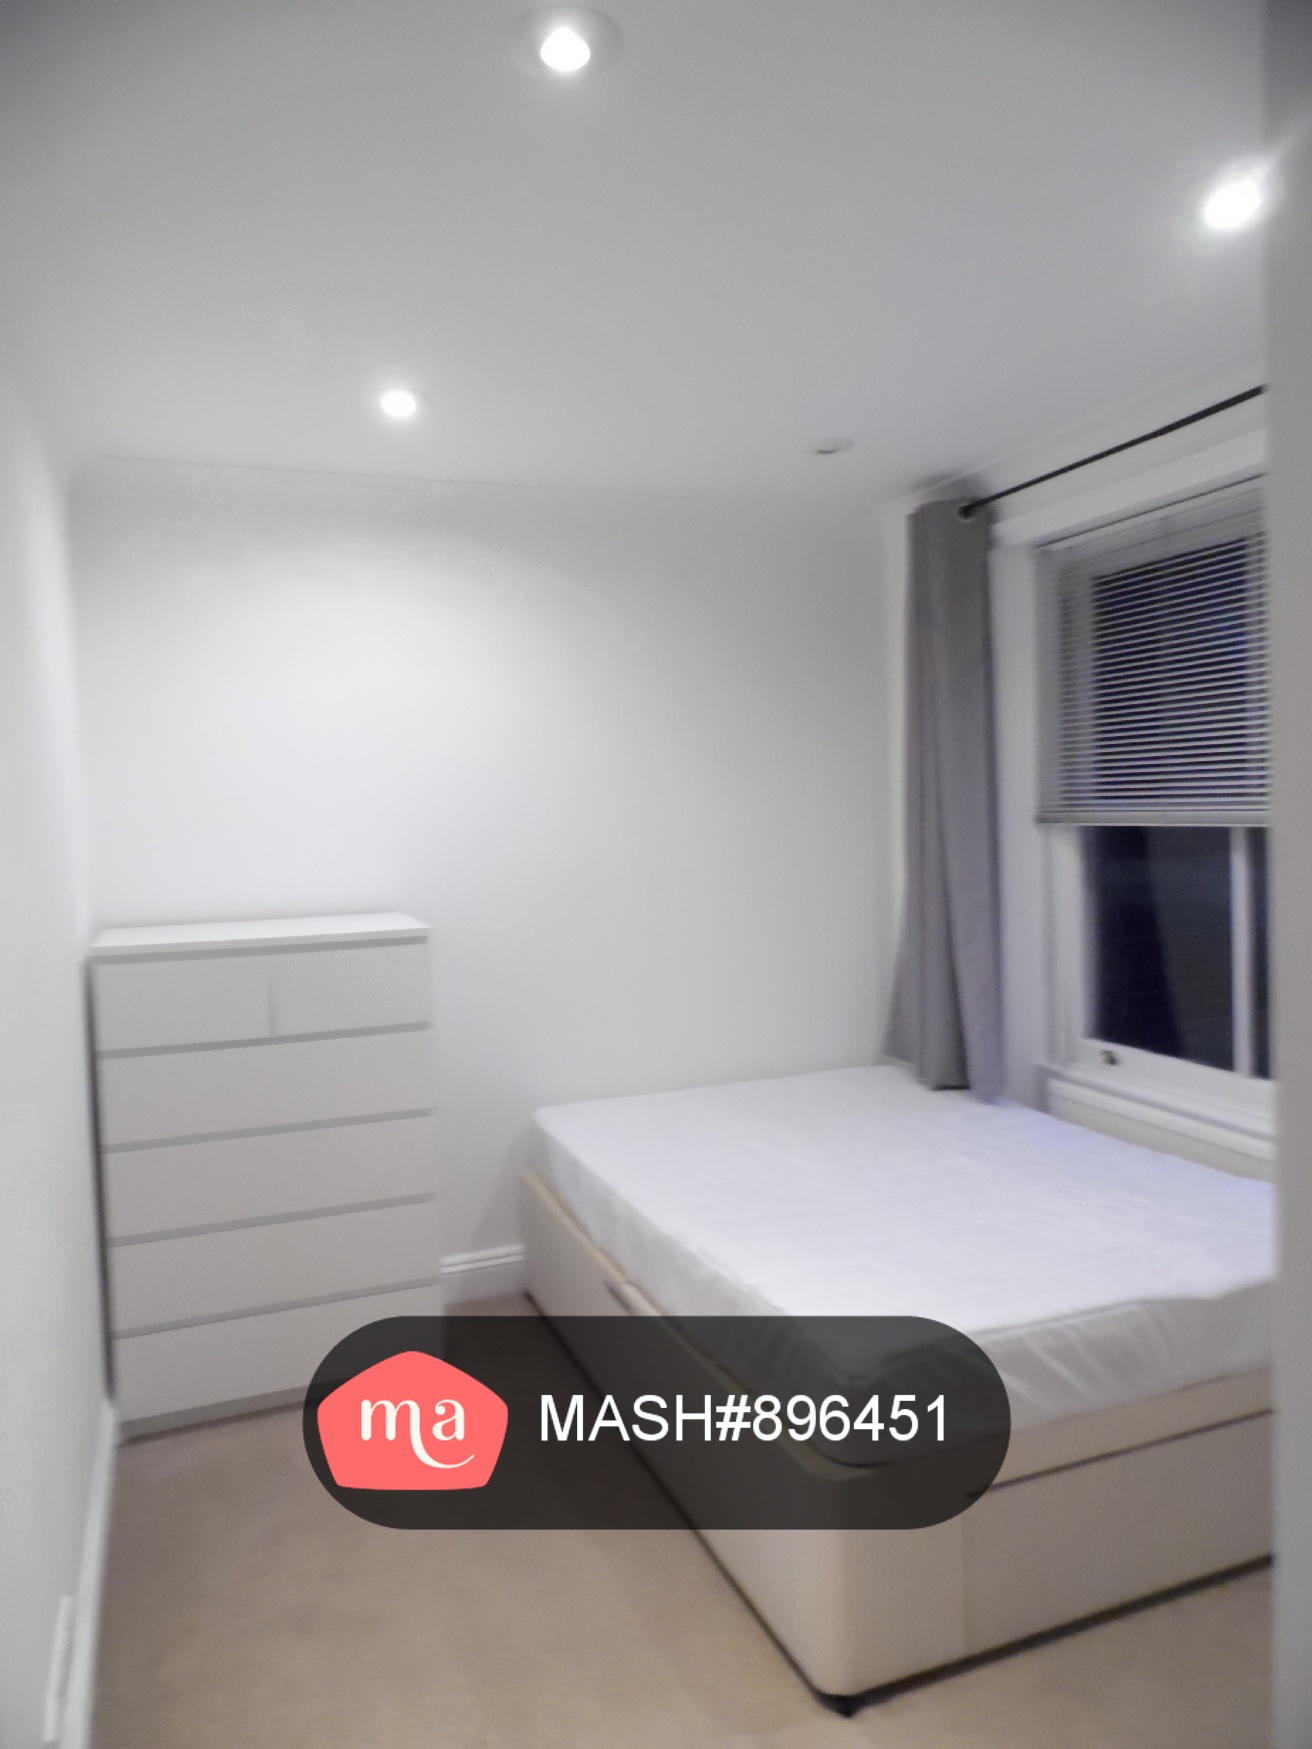 4 Bedroom Flat to rent in London - Mashroom